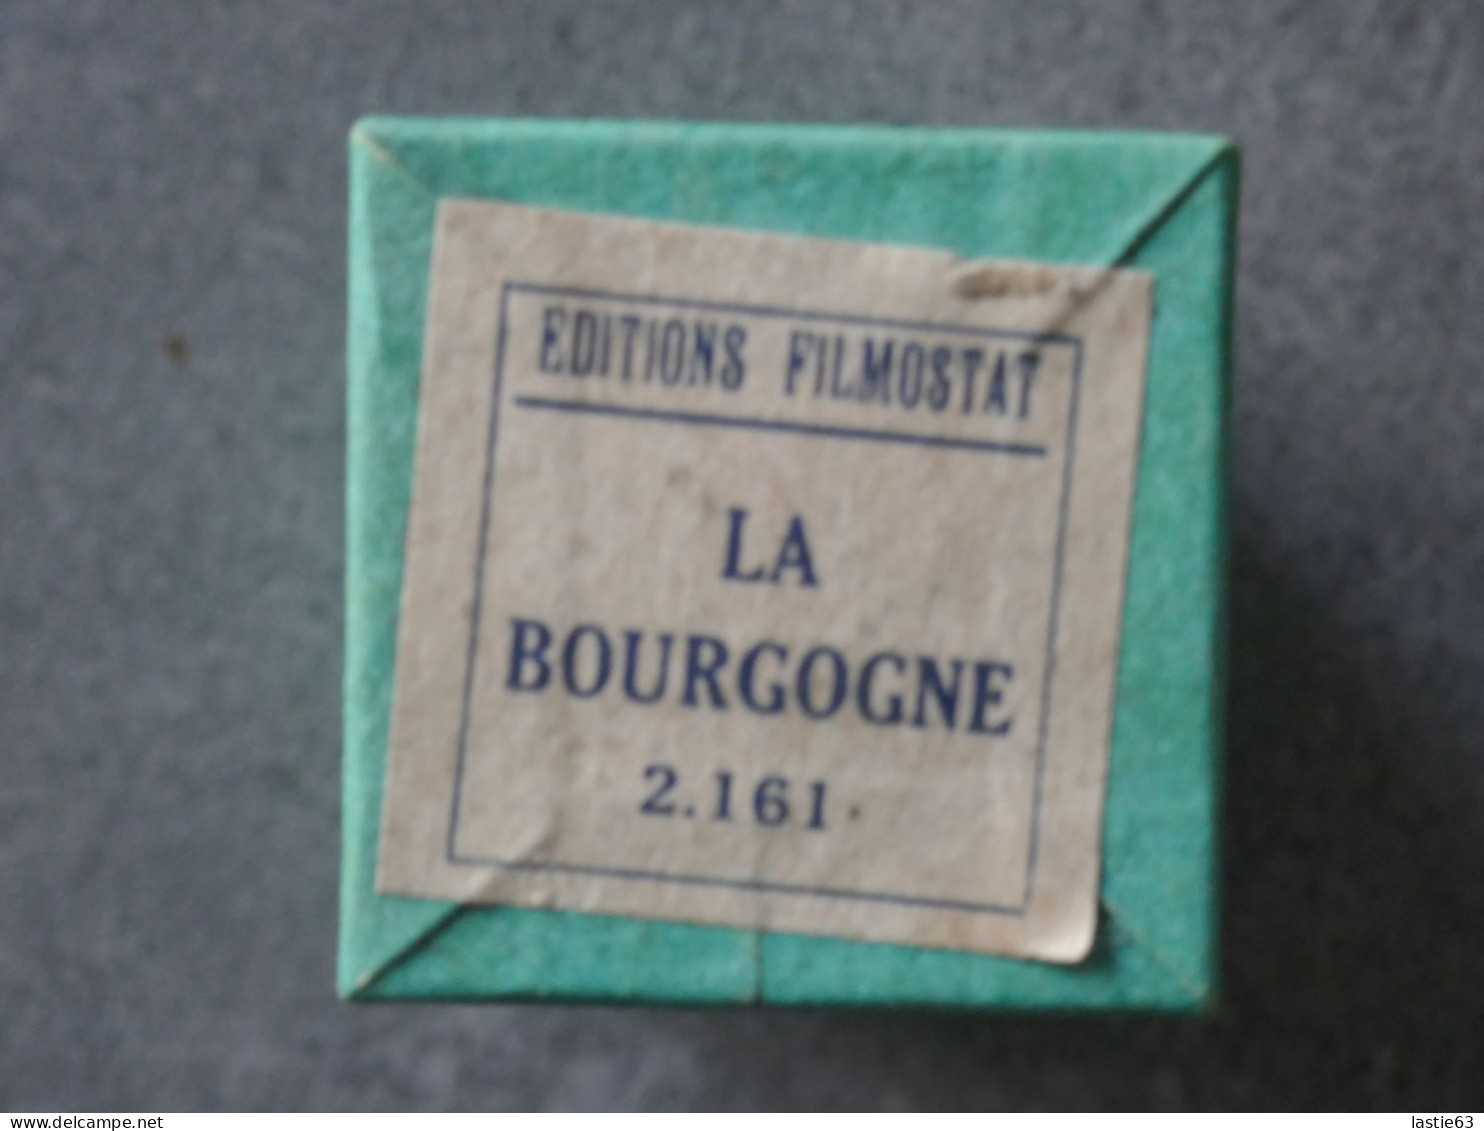 Film Fixe      LA  BOURGOGNE   Filmostat  2.161 - Bobinas De Cine: 35mm - 16mm - 9,5+8+S8mm